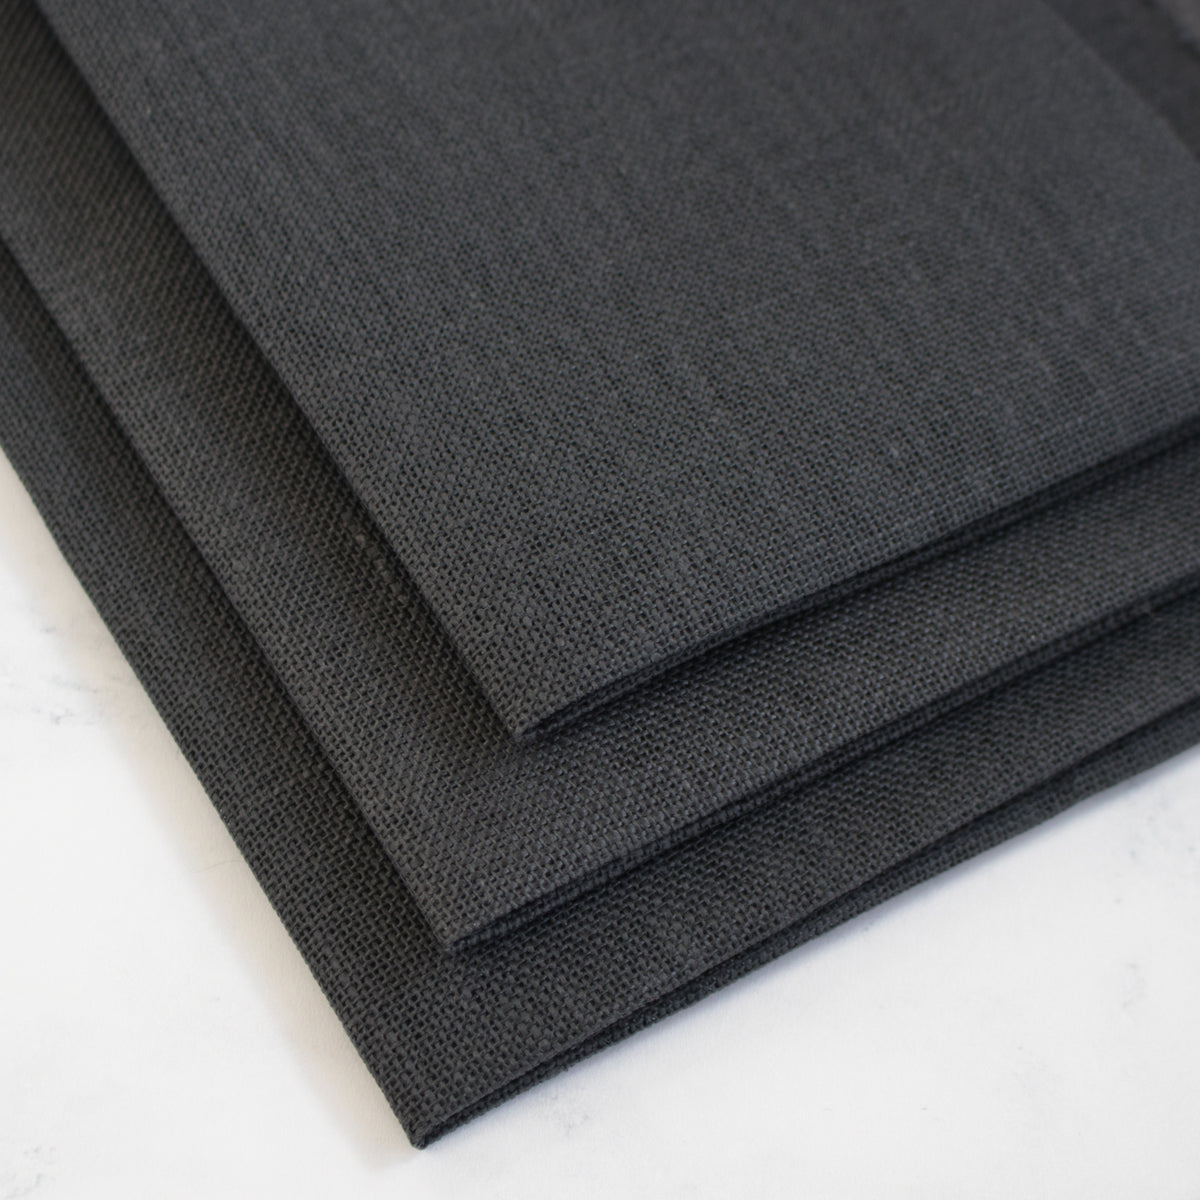 Chalkboard Black Linen Cross Stitch Fabric - 32 count